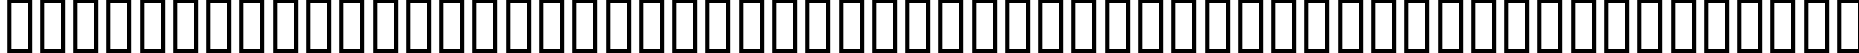 Пример написания шрифтом EuroRoman Oblique текста на русском